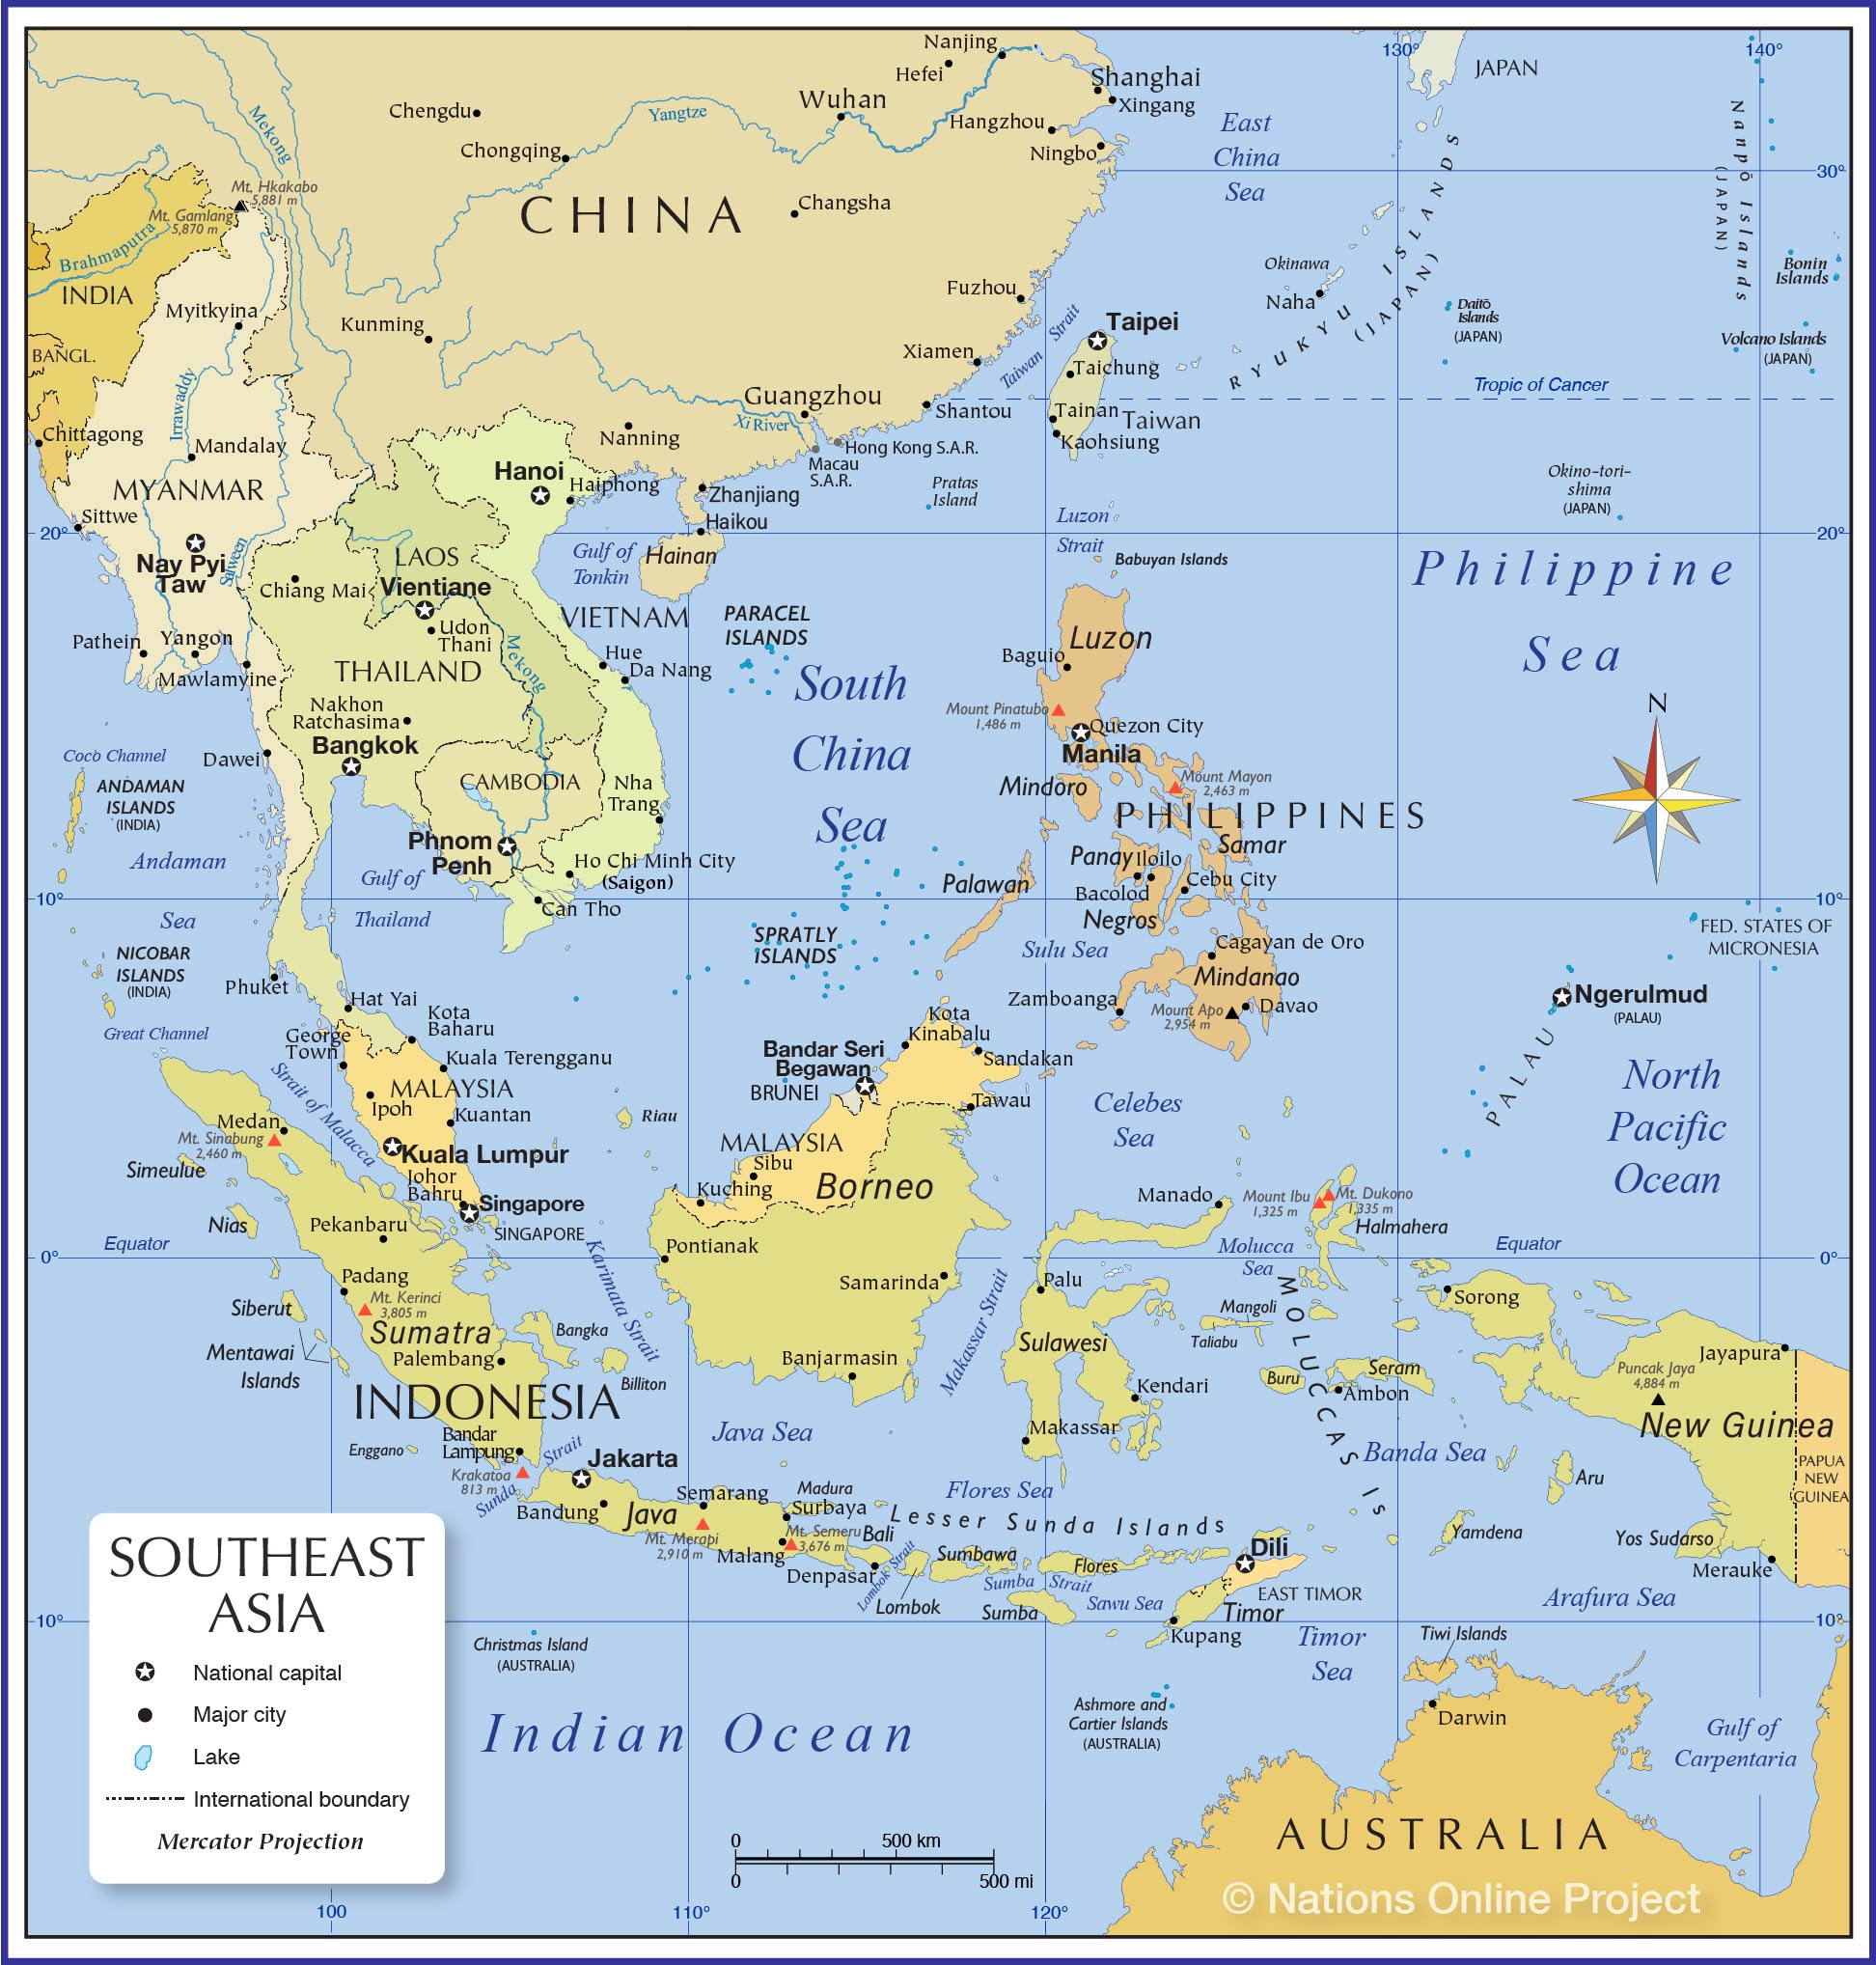 Asia Political Map Printable